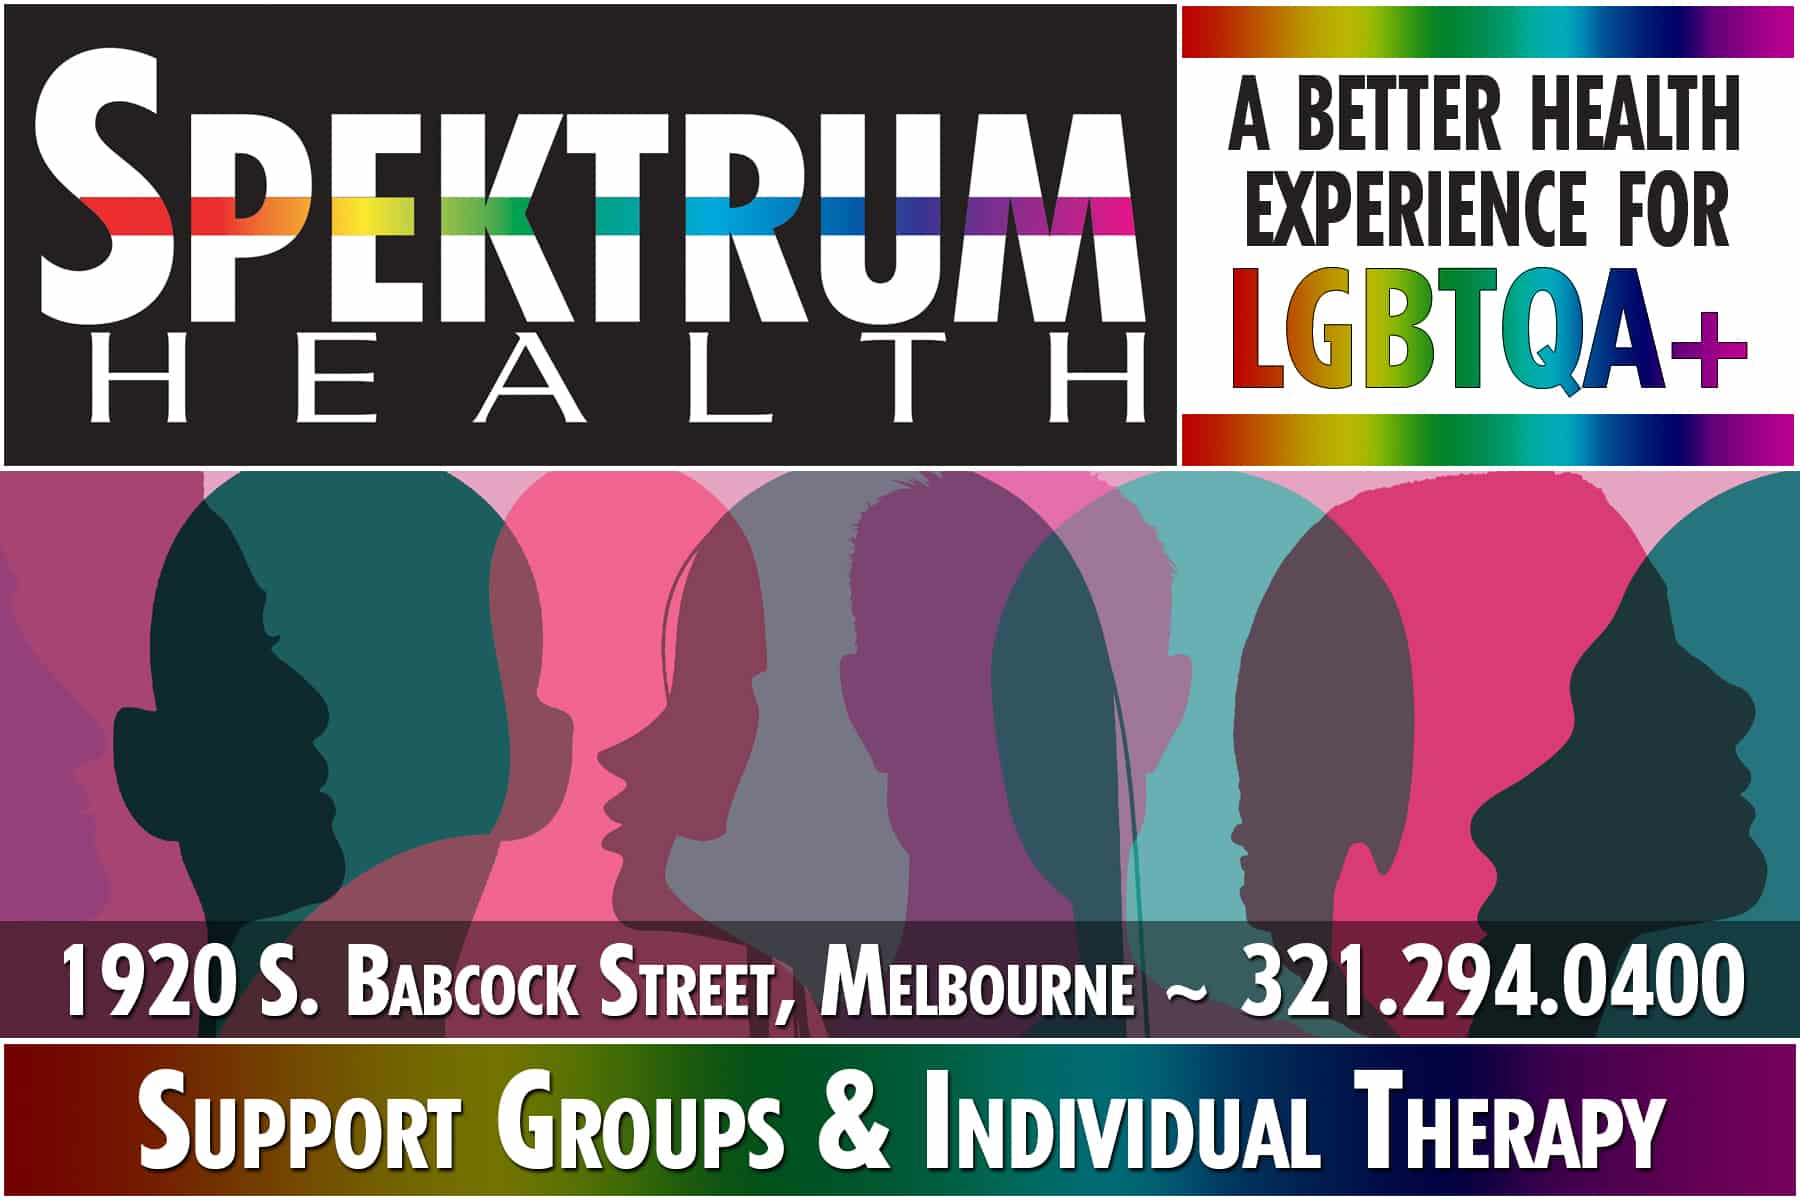 LGBTQA+ Healthcare Mental Health Therapy Melbourne Florida, Brevard County